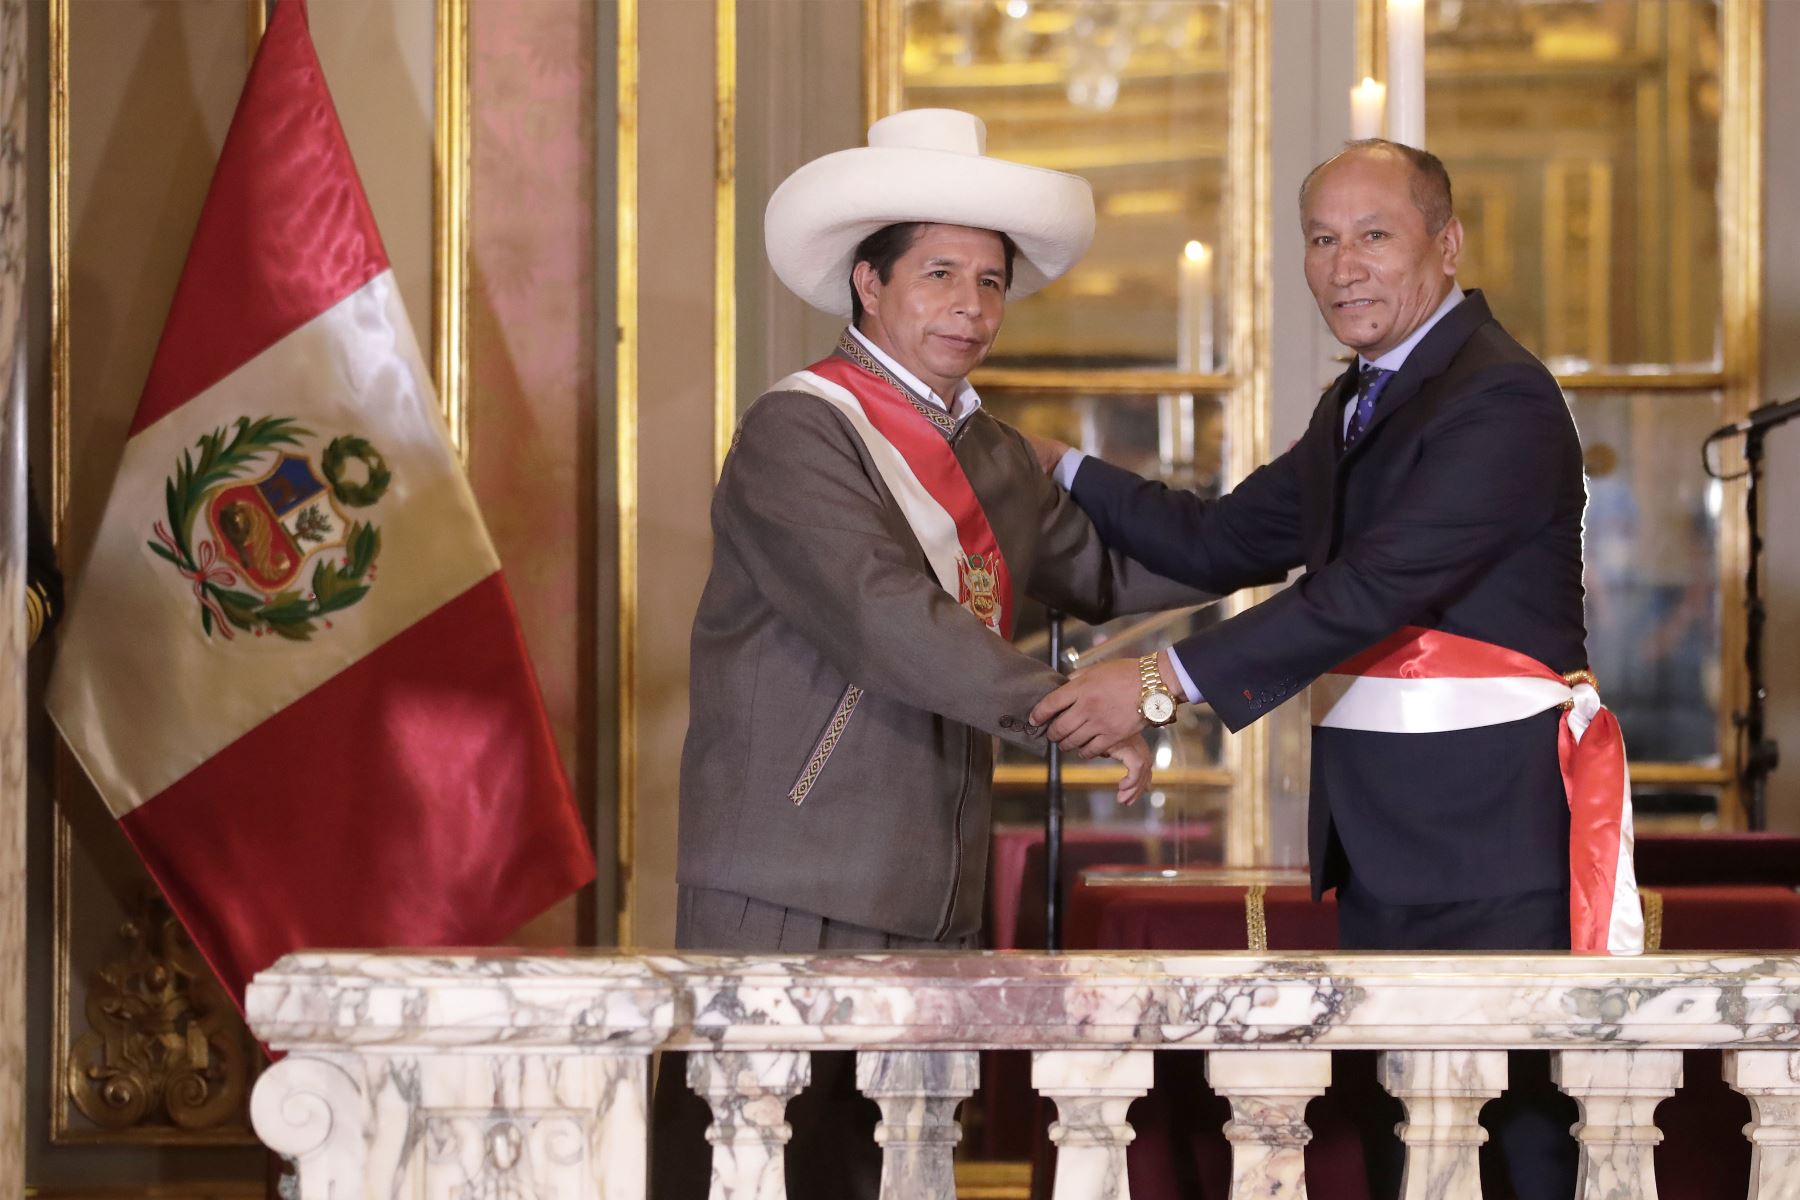 Presidente Castillo toma juramento al ministro de Transportes y Comunicaciones, Juan Francisco Silva Villegas.
Foto: ANDINA/Prensa Presidencia